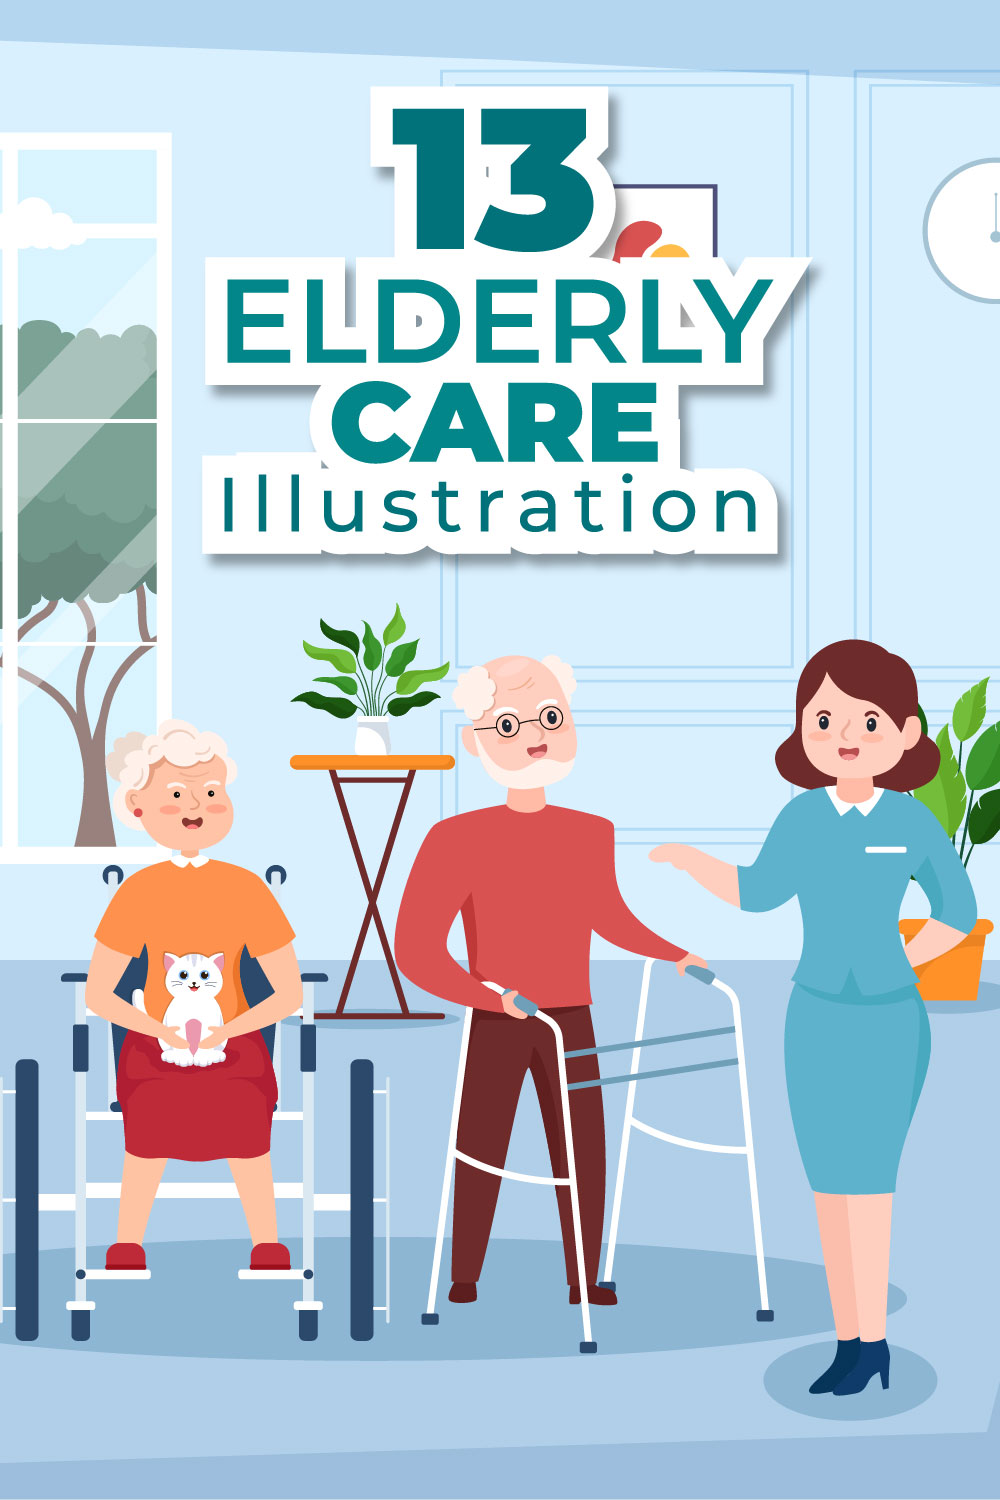 13 Elderly Care Services Illustration pinterest image.